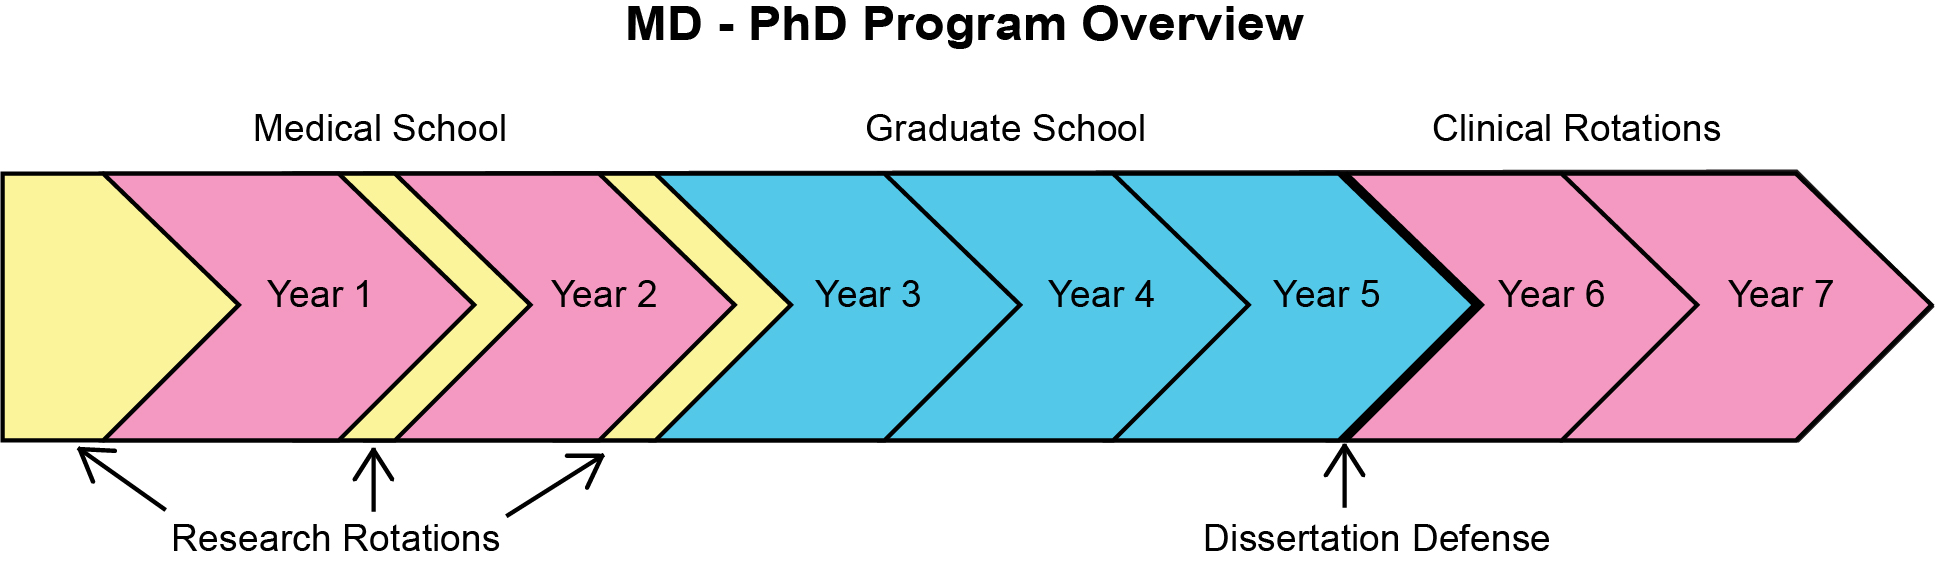 MD-PhD program image